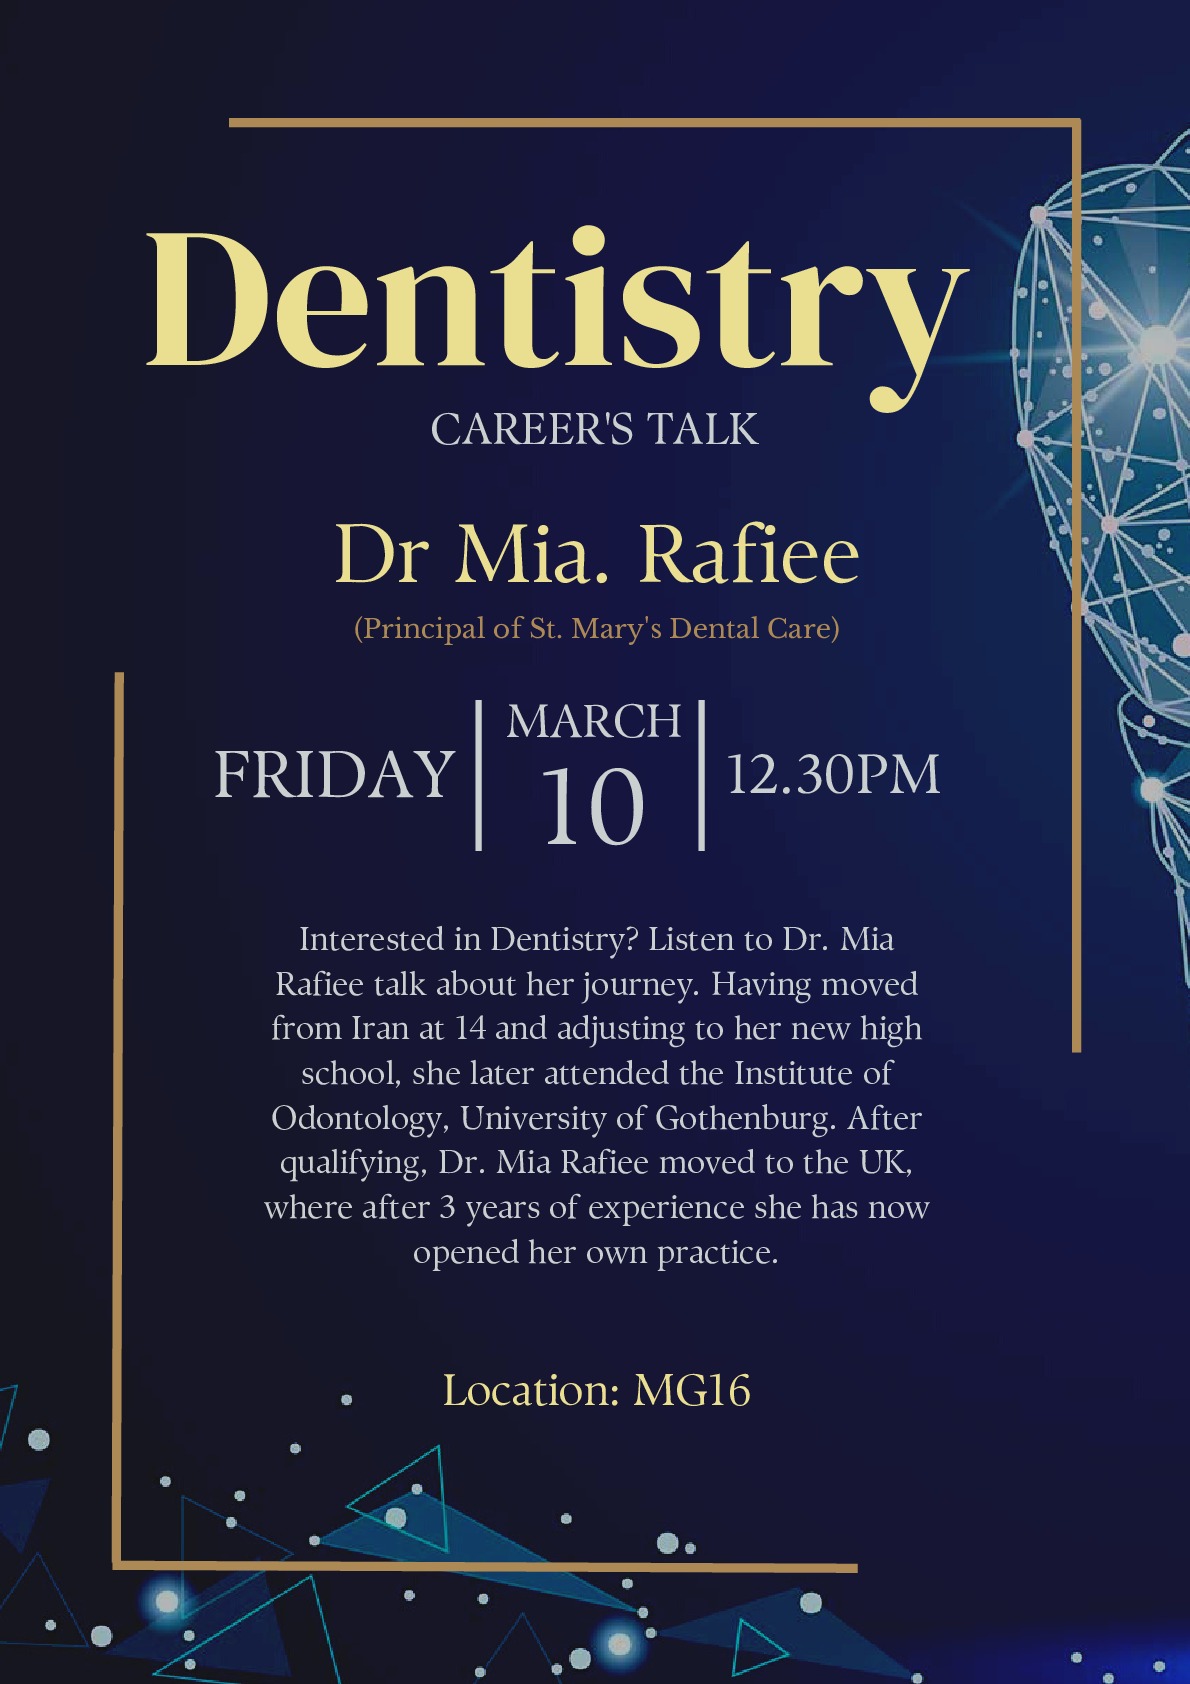 Dentistry Career's Talk Poster